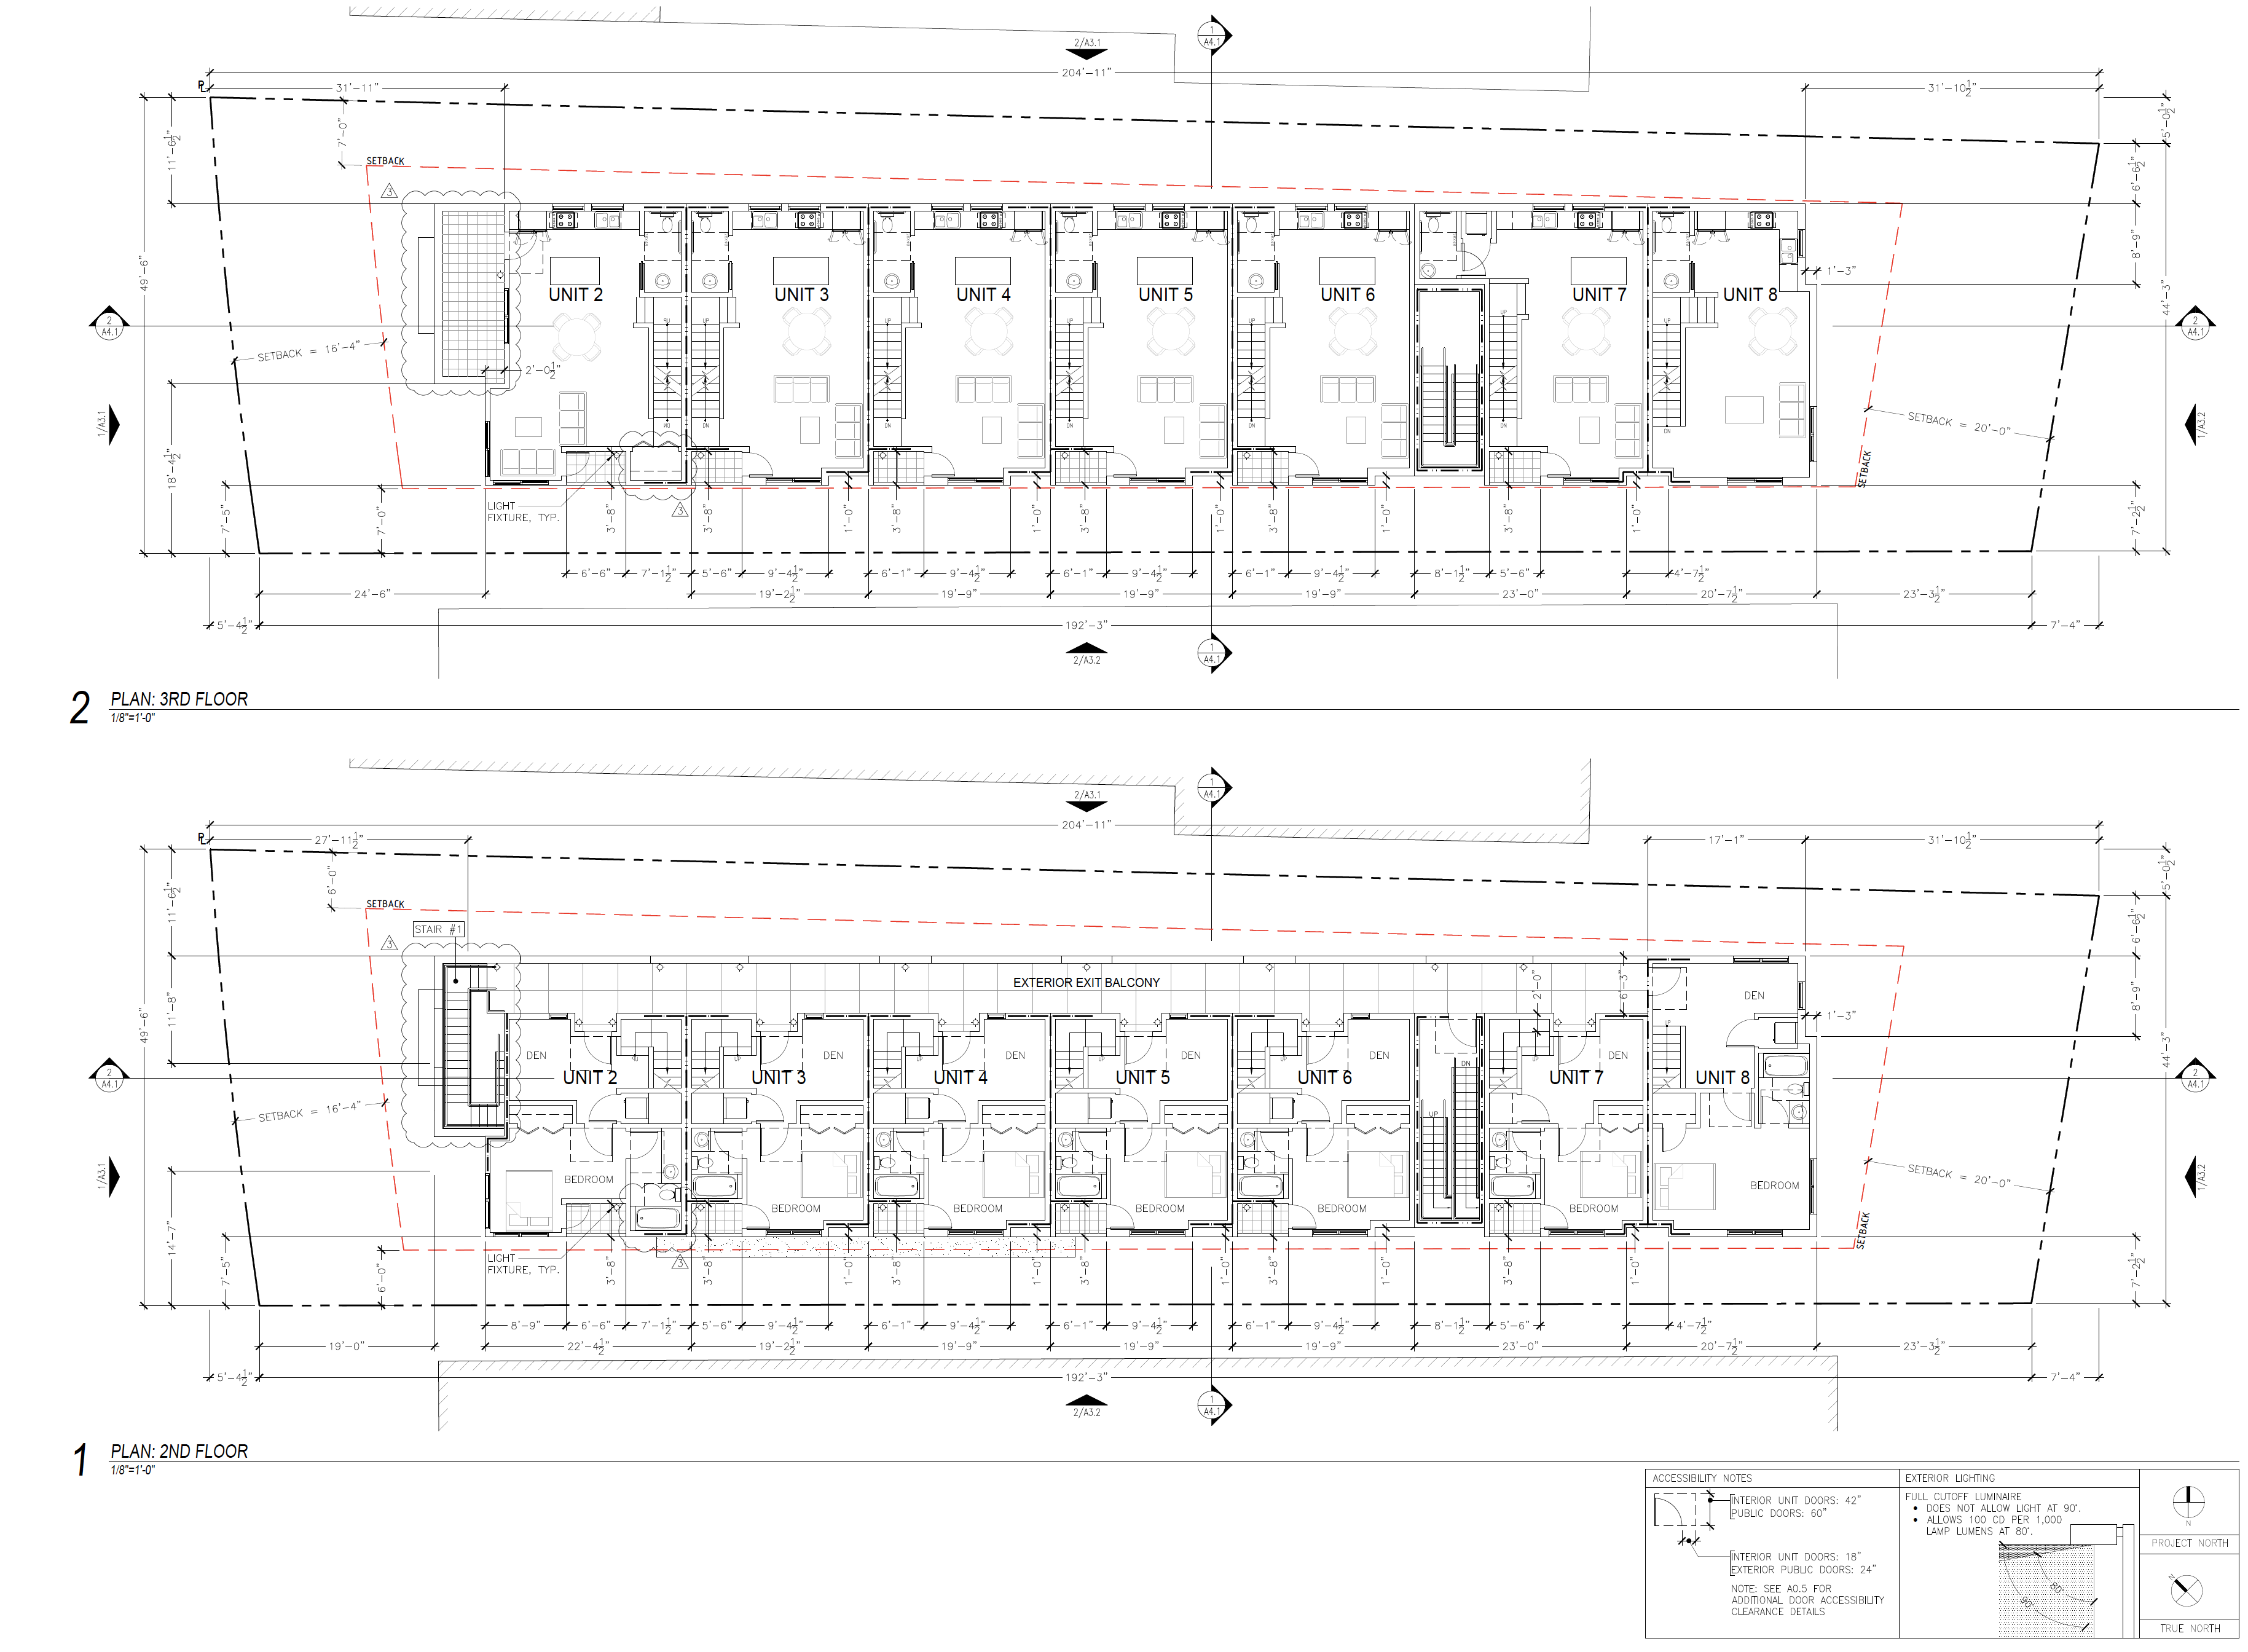 1433 Floribunda Avenue second and third-level floor plans, illustration by Levy Design Partners